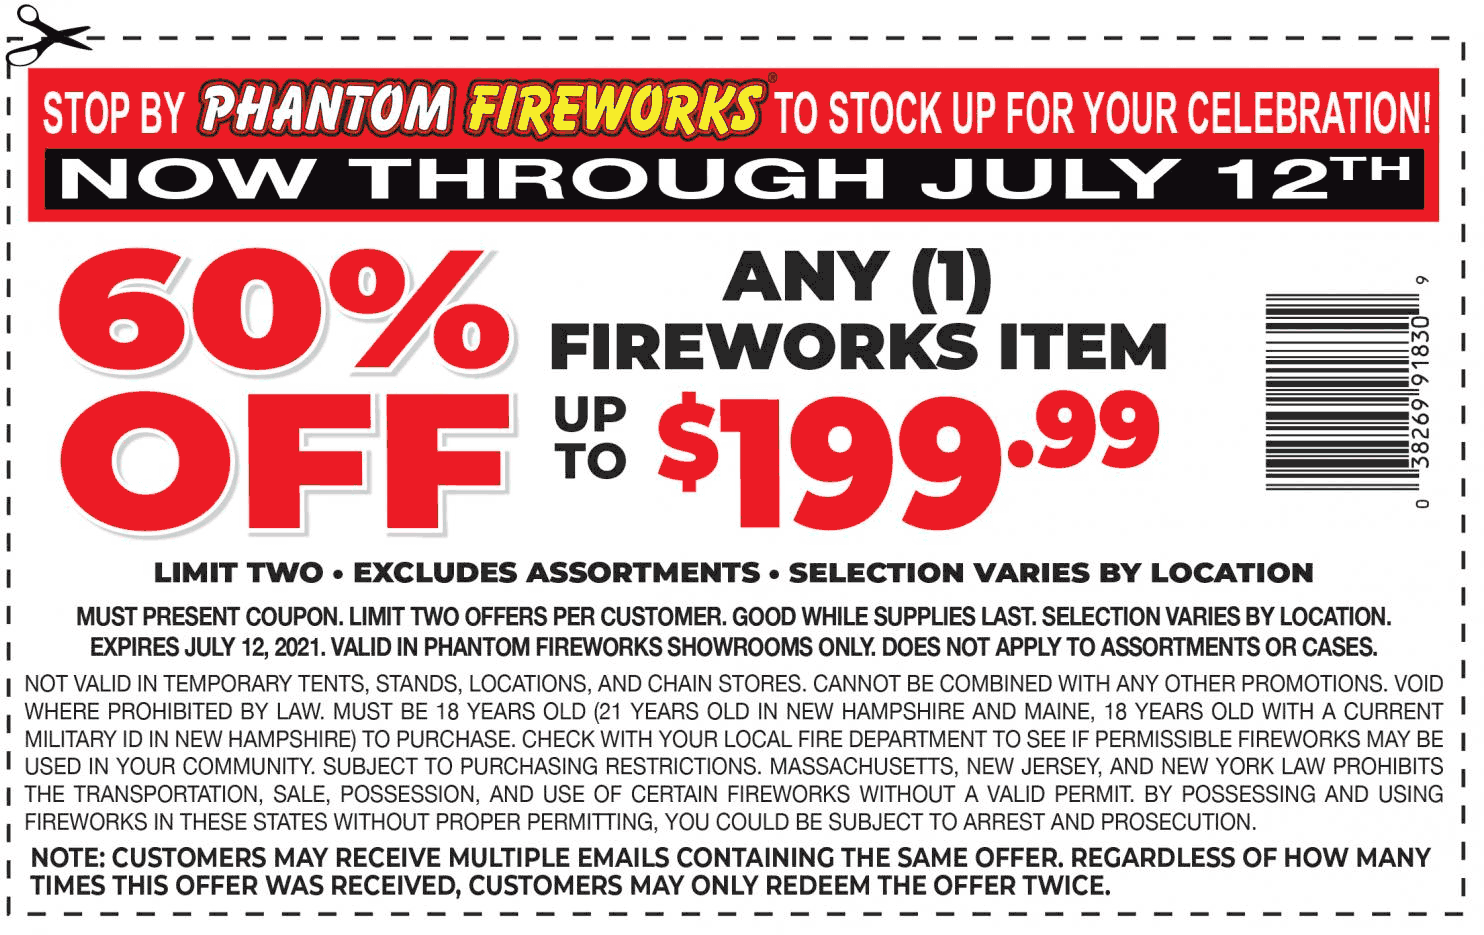 Phantom Fireworks stores Coupon  60% off at Phantom Fireworks #phantomfireworks 